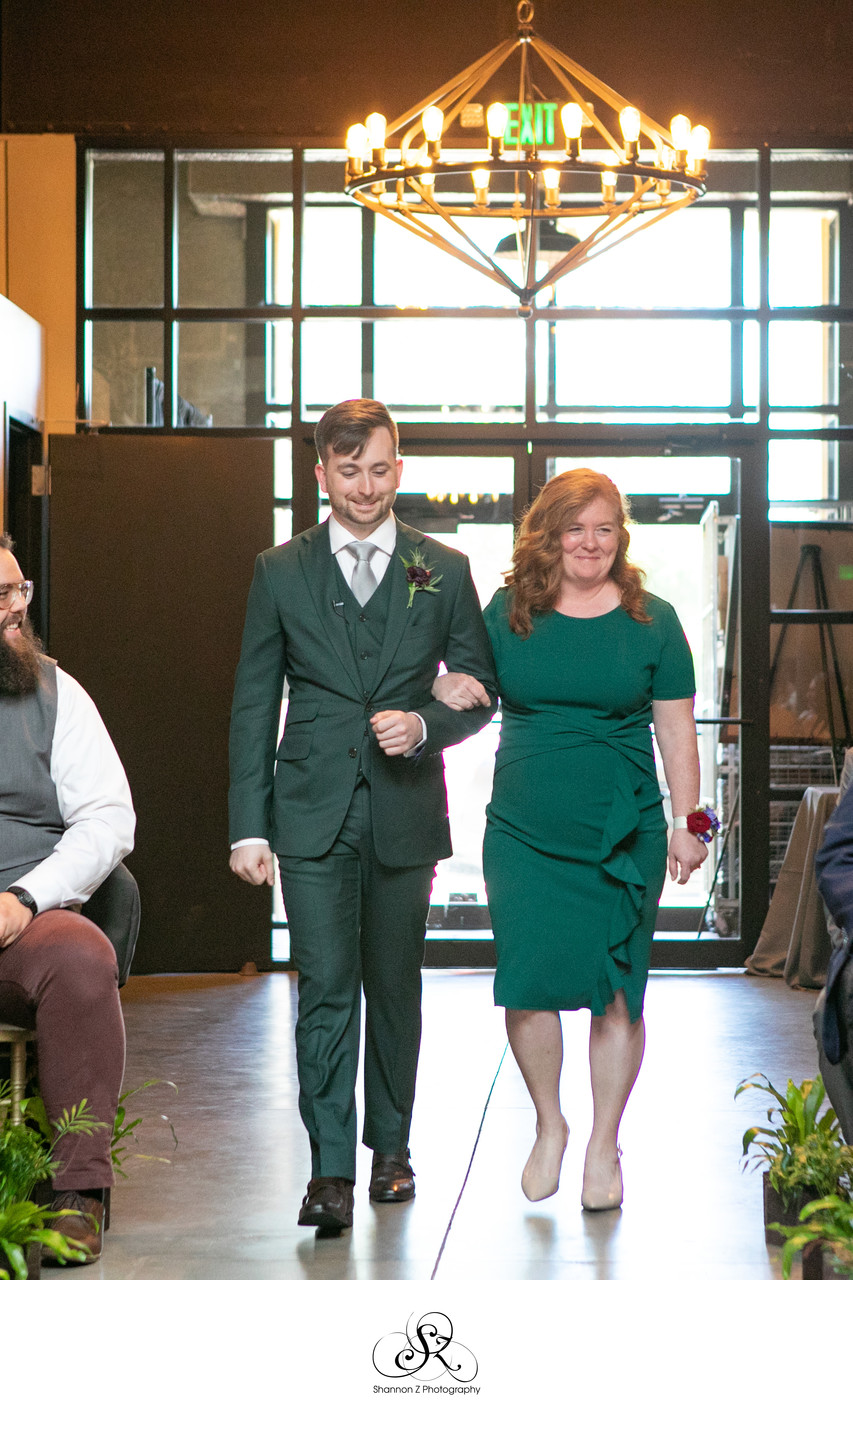 LGBTQ Friendly Wedding Photos: Here Comes the Groom